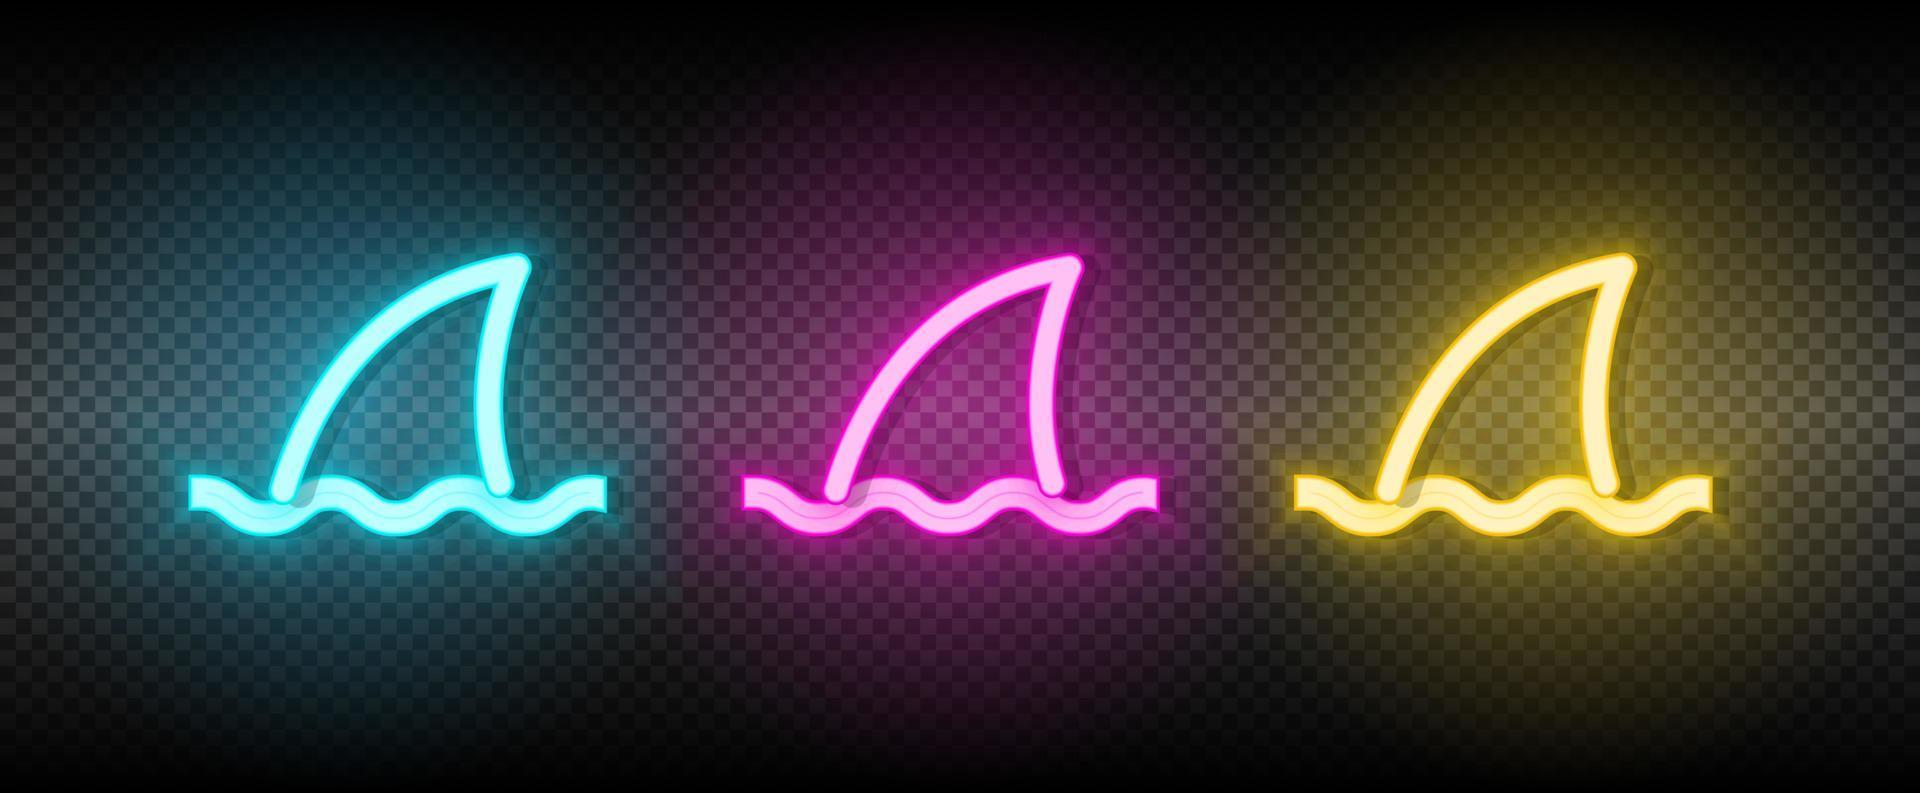 sea, shark, business neon vector icon. Illustration neon blue, yellow, red icon set